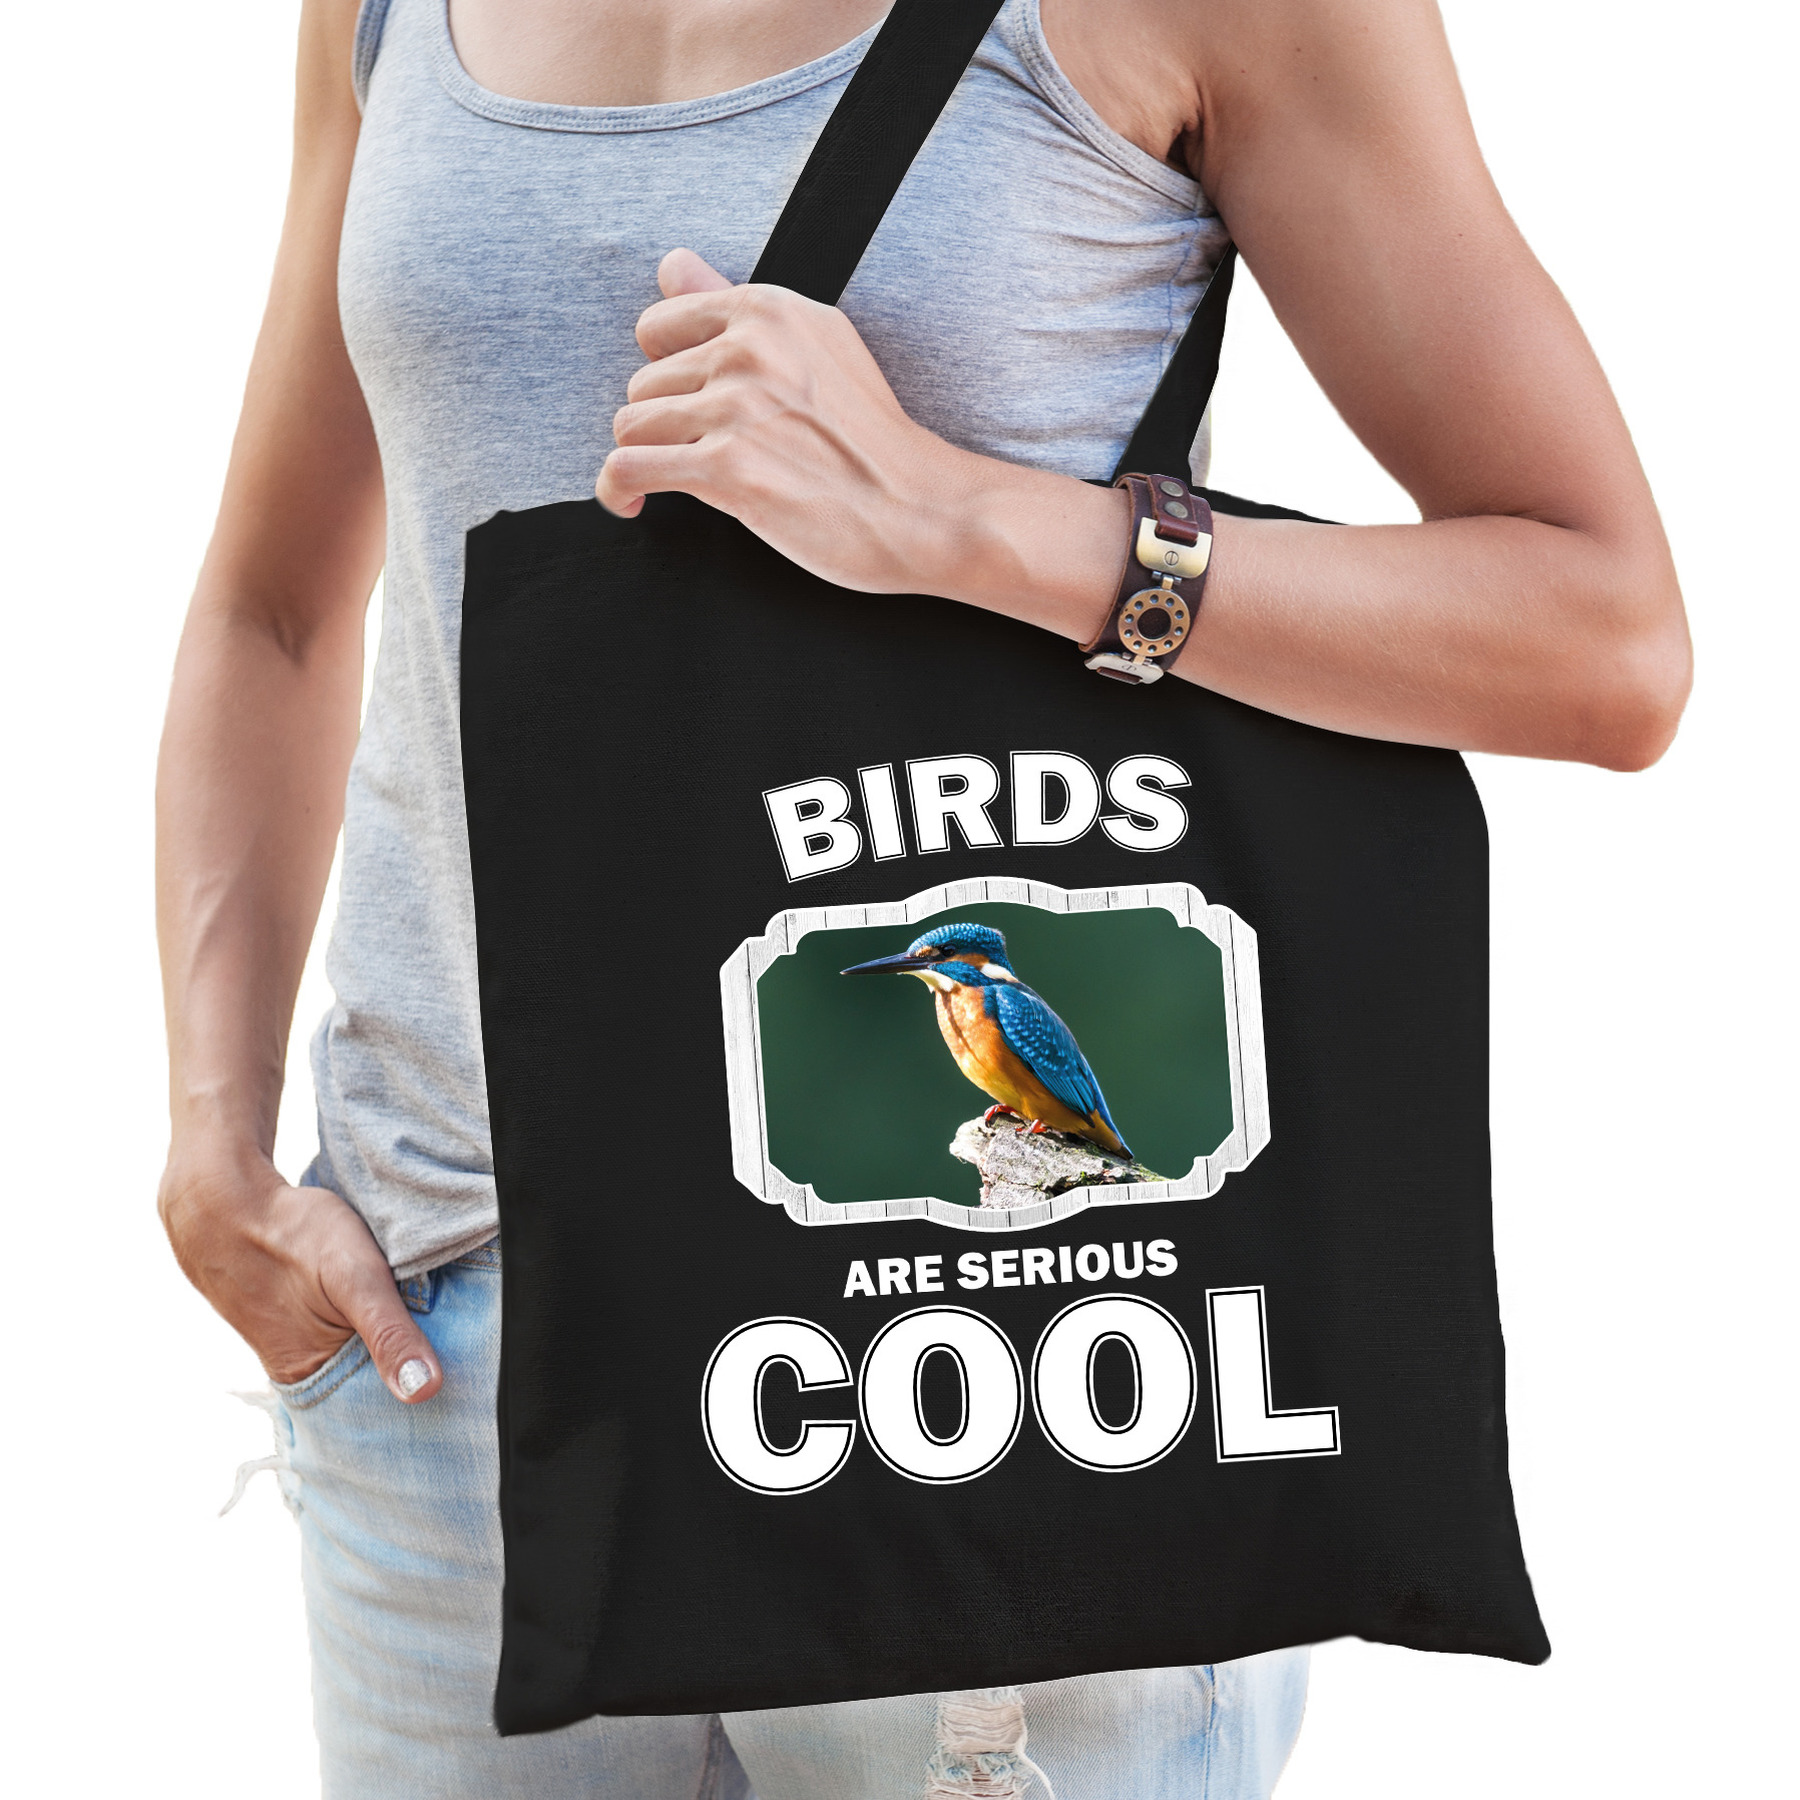 Katoenen tasje birds are serious cool zwart - vogels/ ijsvogel zittend cadeau tas